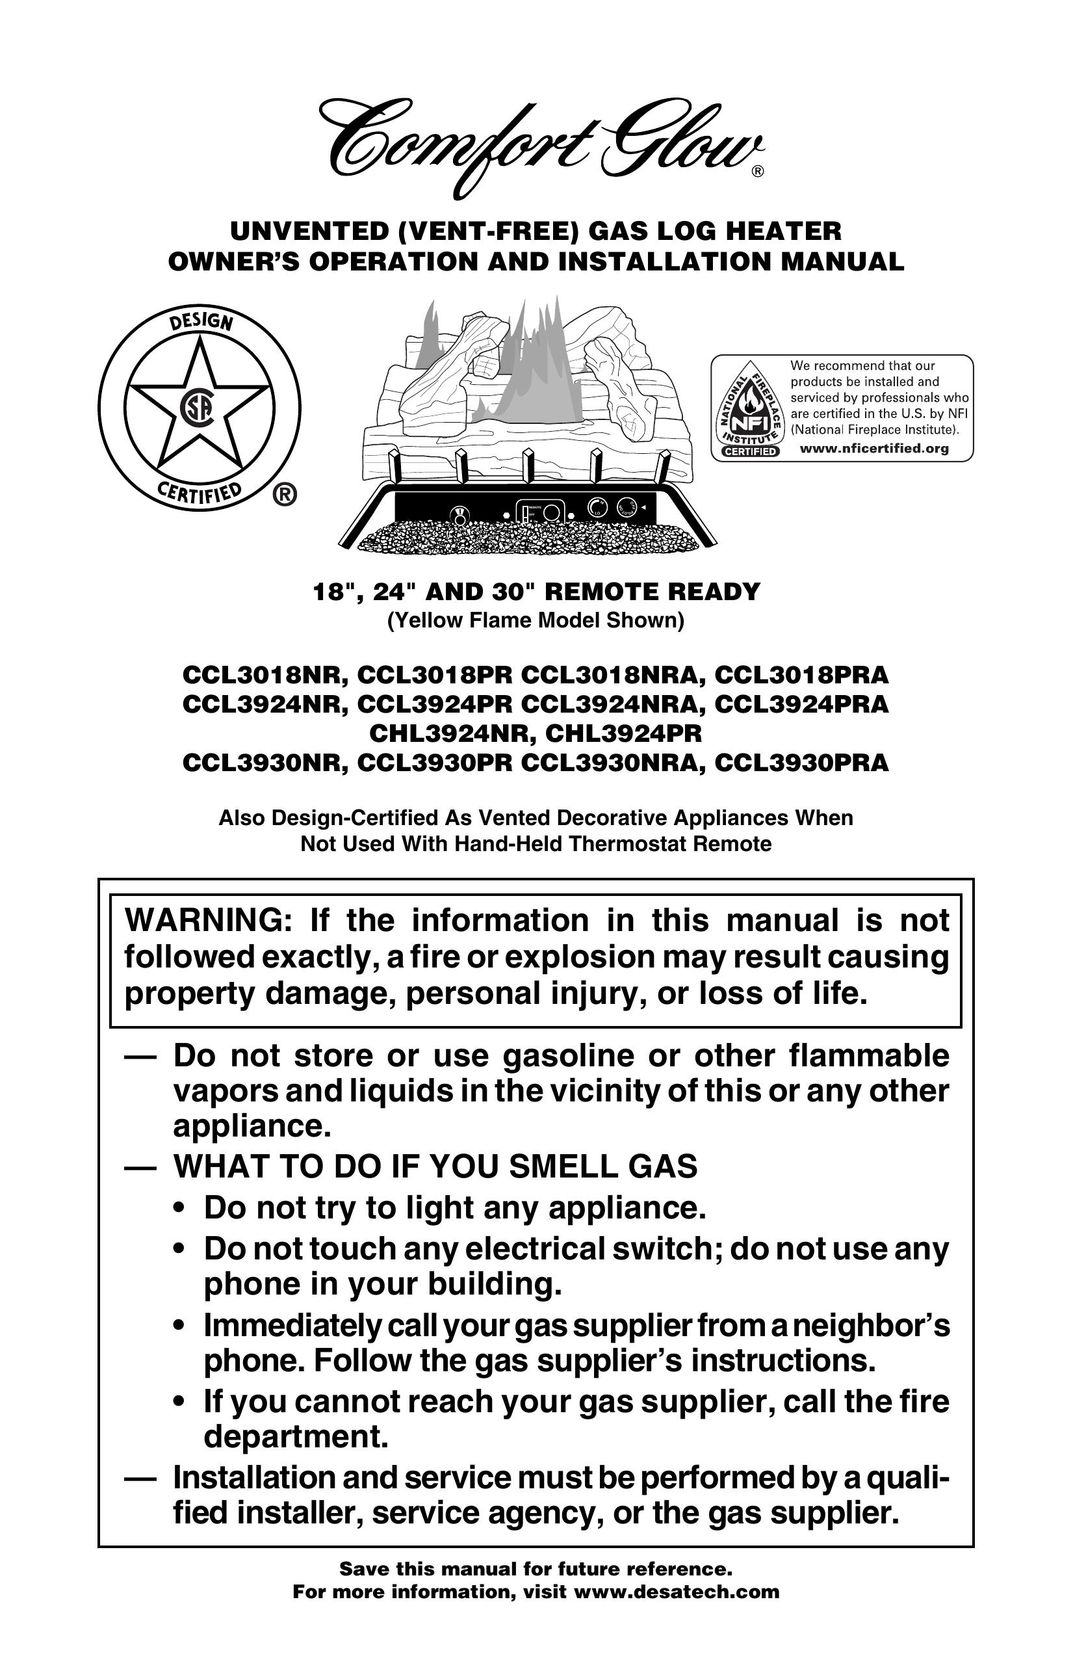 Desa Tech CCL3930PRA Electric Heater User Manual